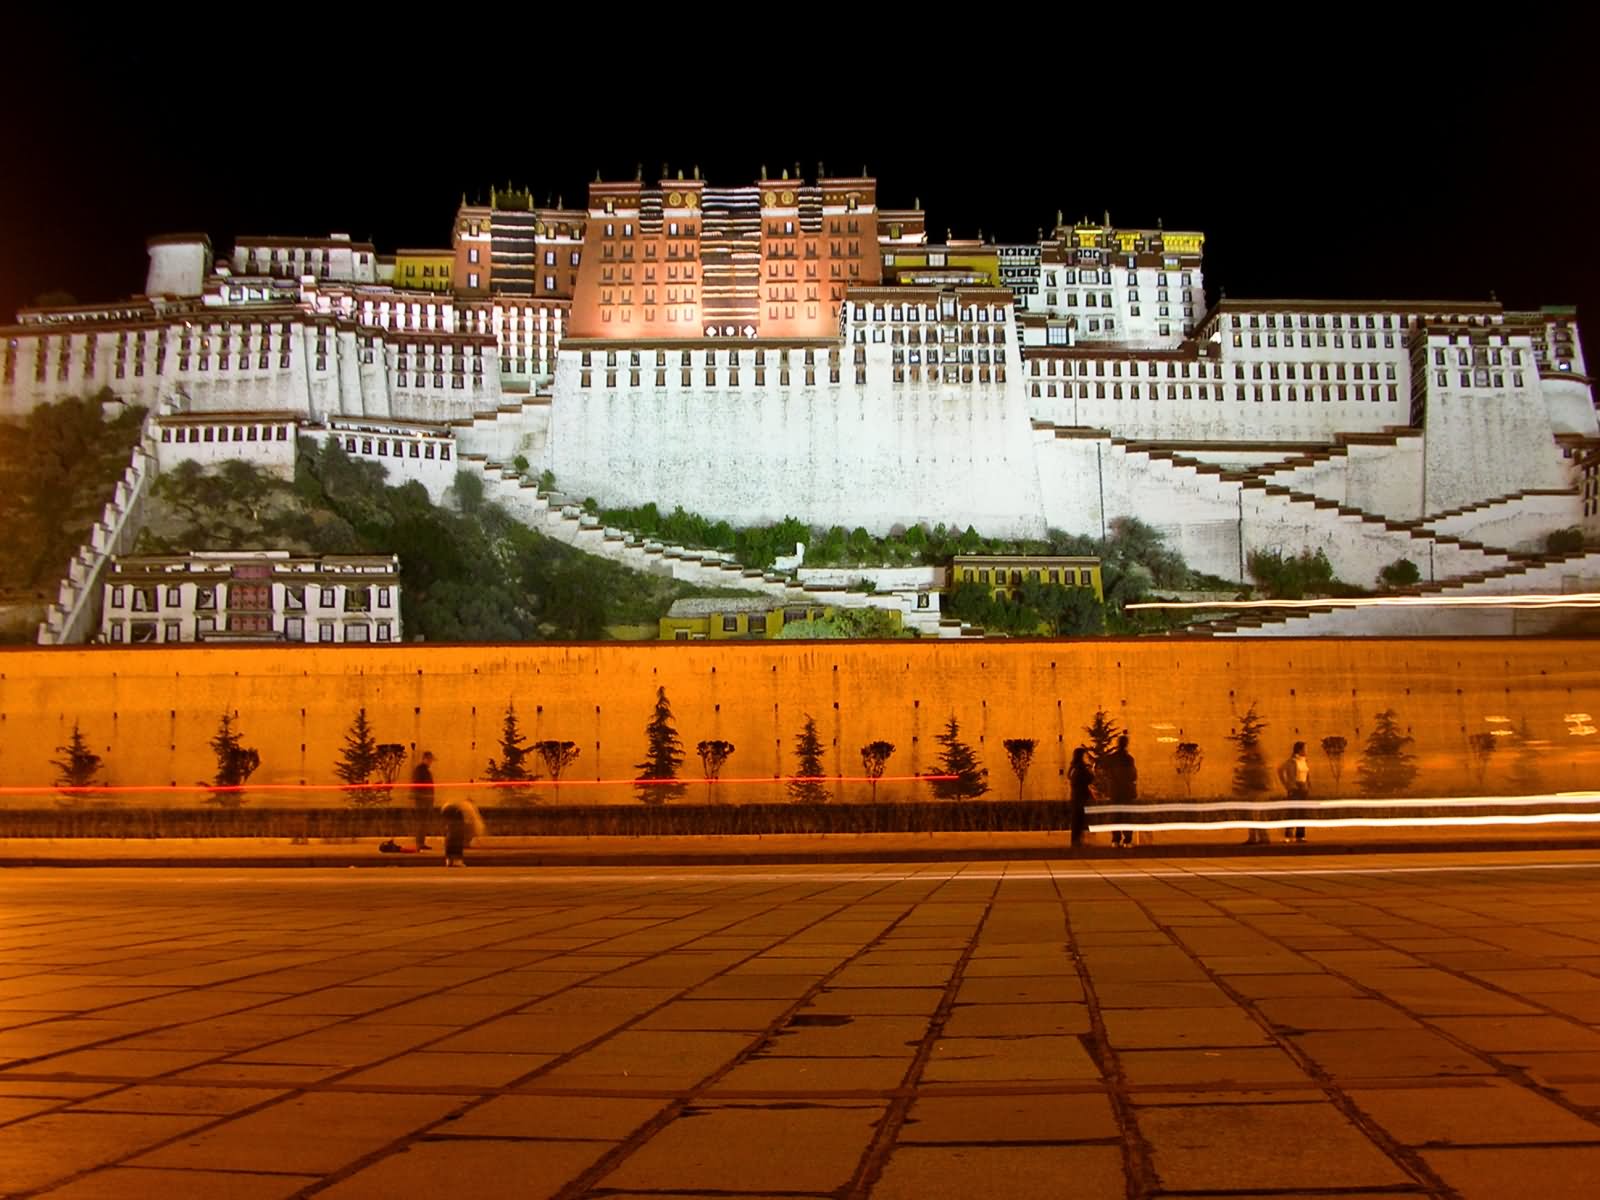 The Potala Palace Night View Image